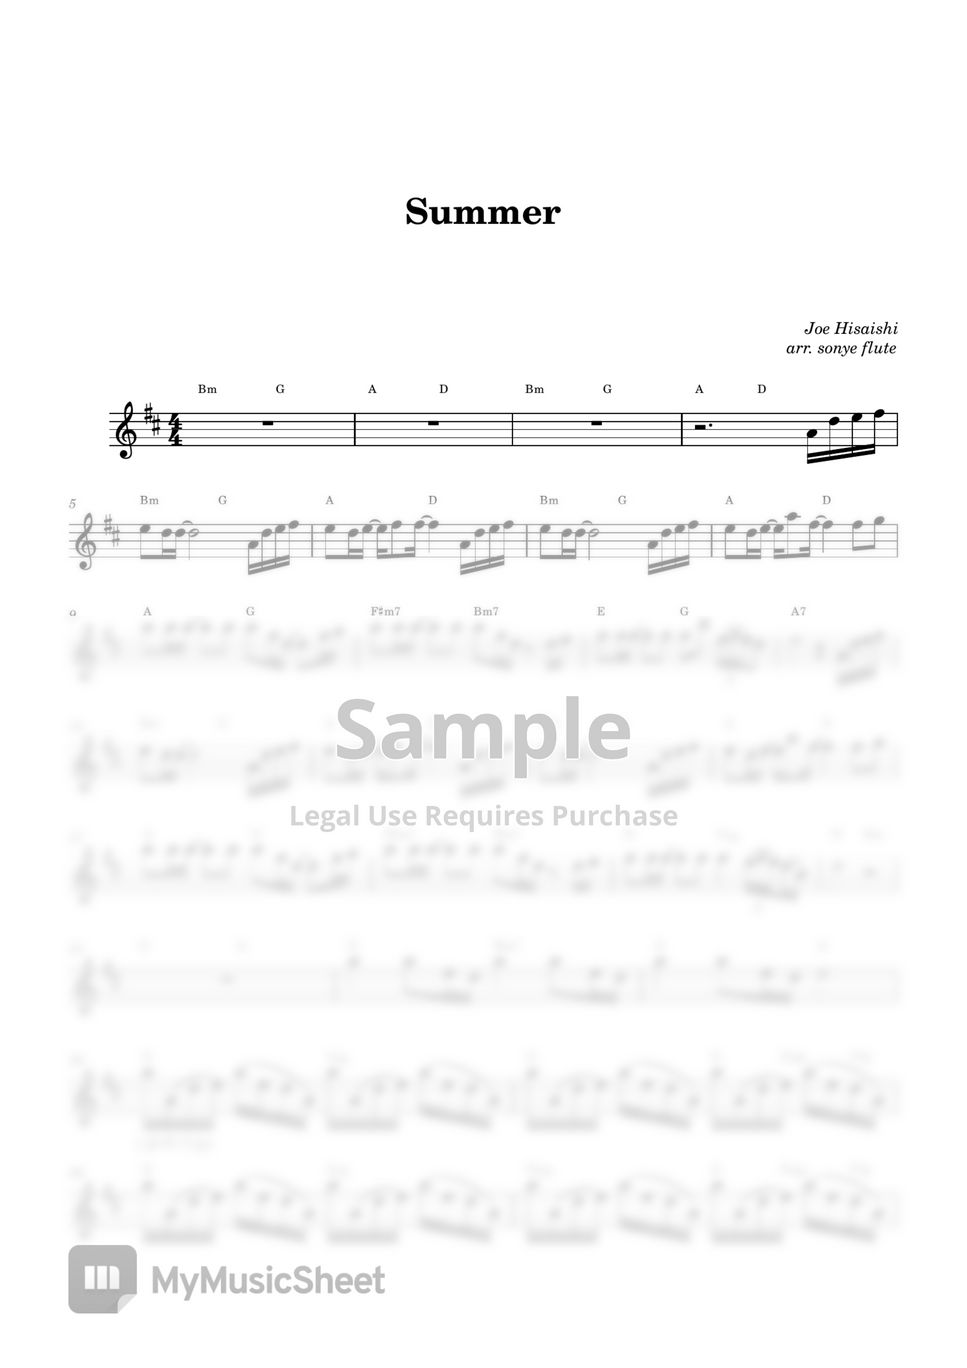 Joe Hisaishi - Summer (Flute Sheet Music) by sonye flute